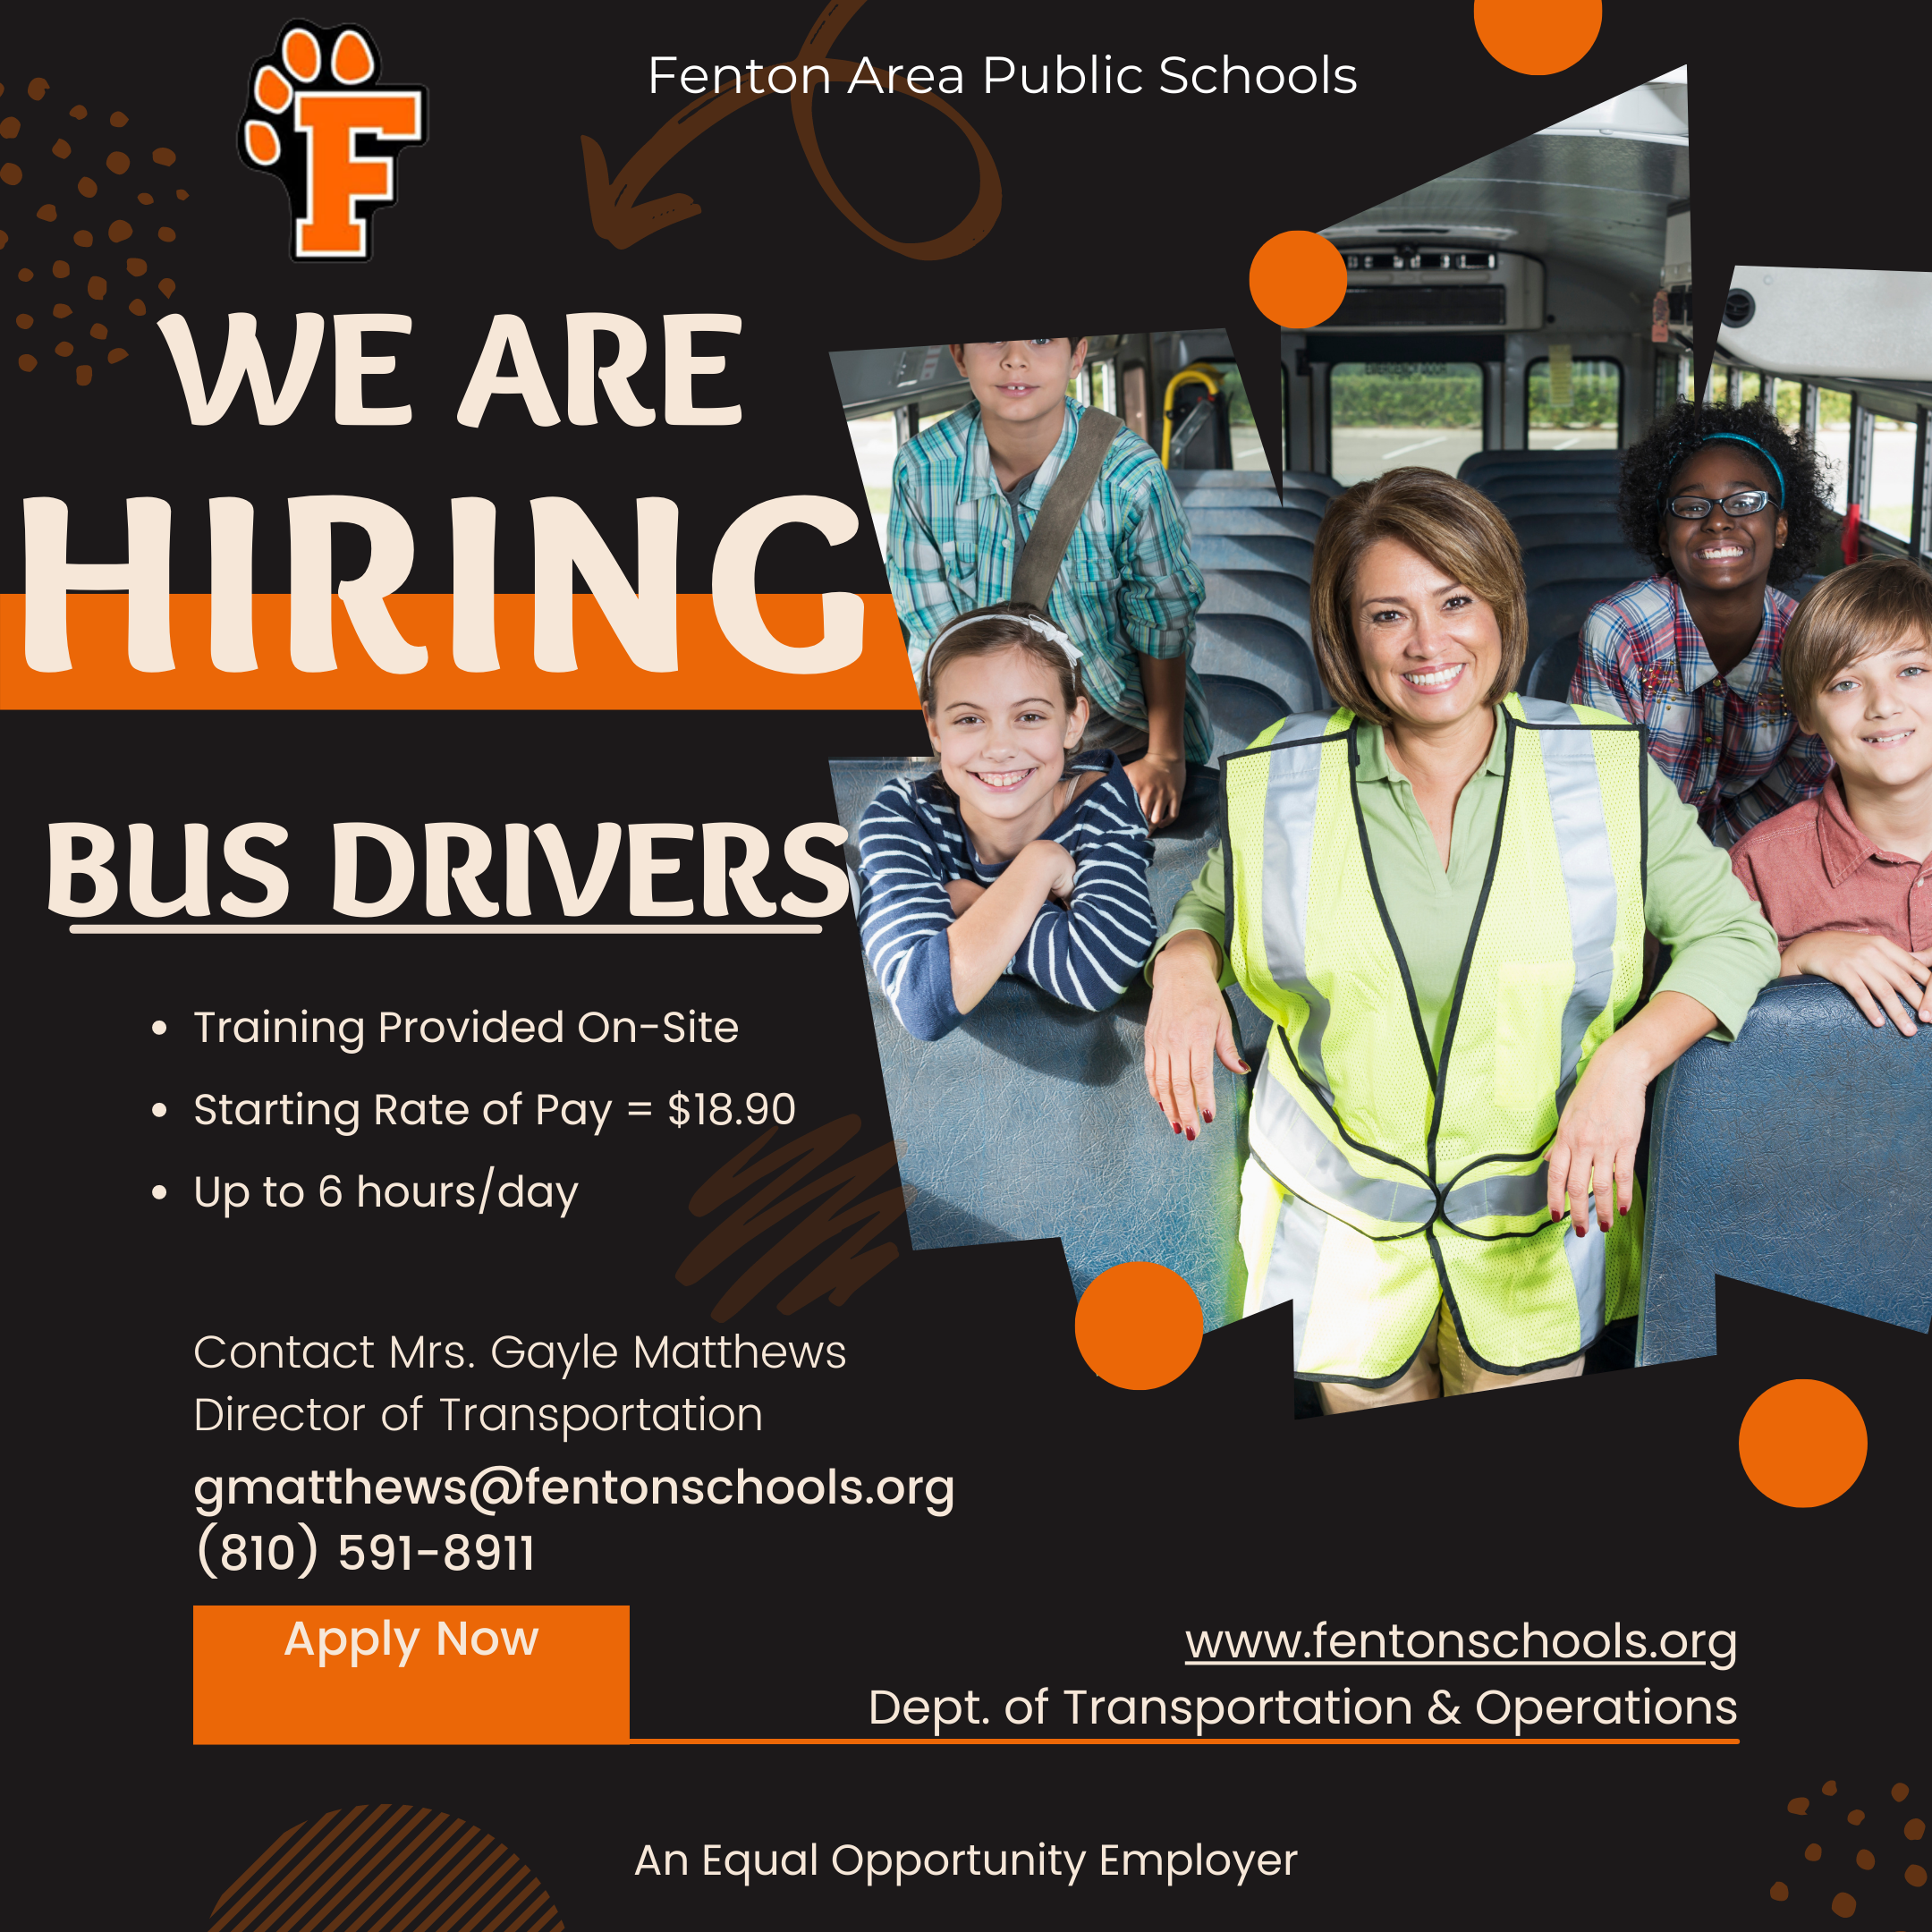 We Are Hiring - Bus Drivers Job Posting